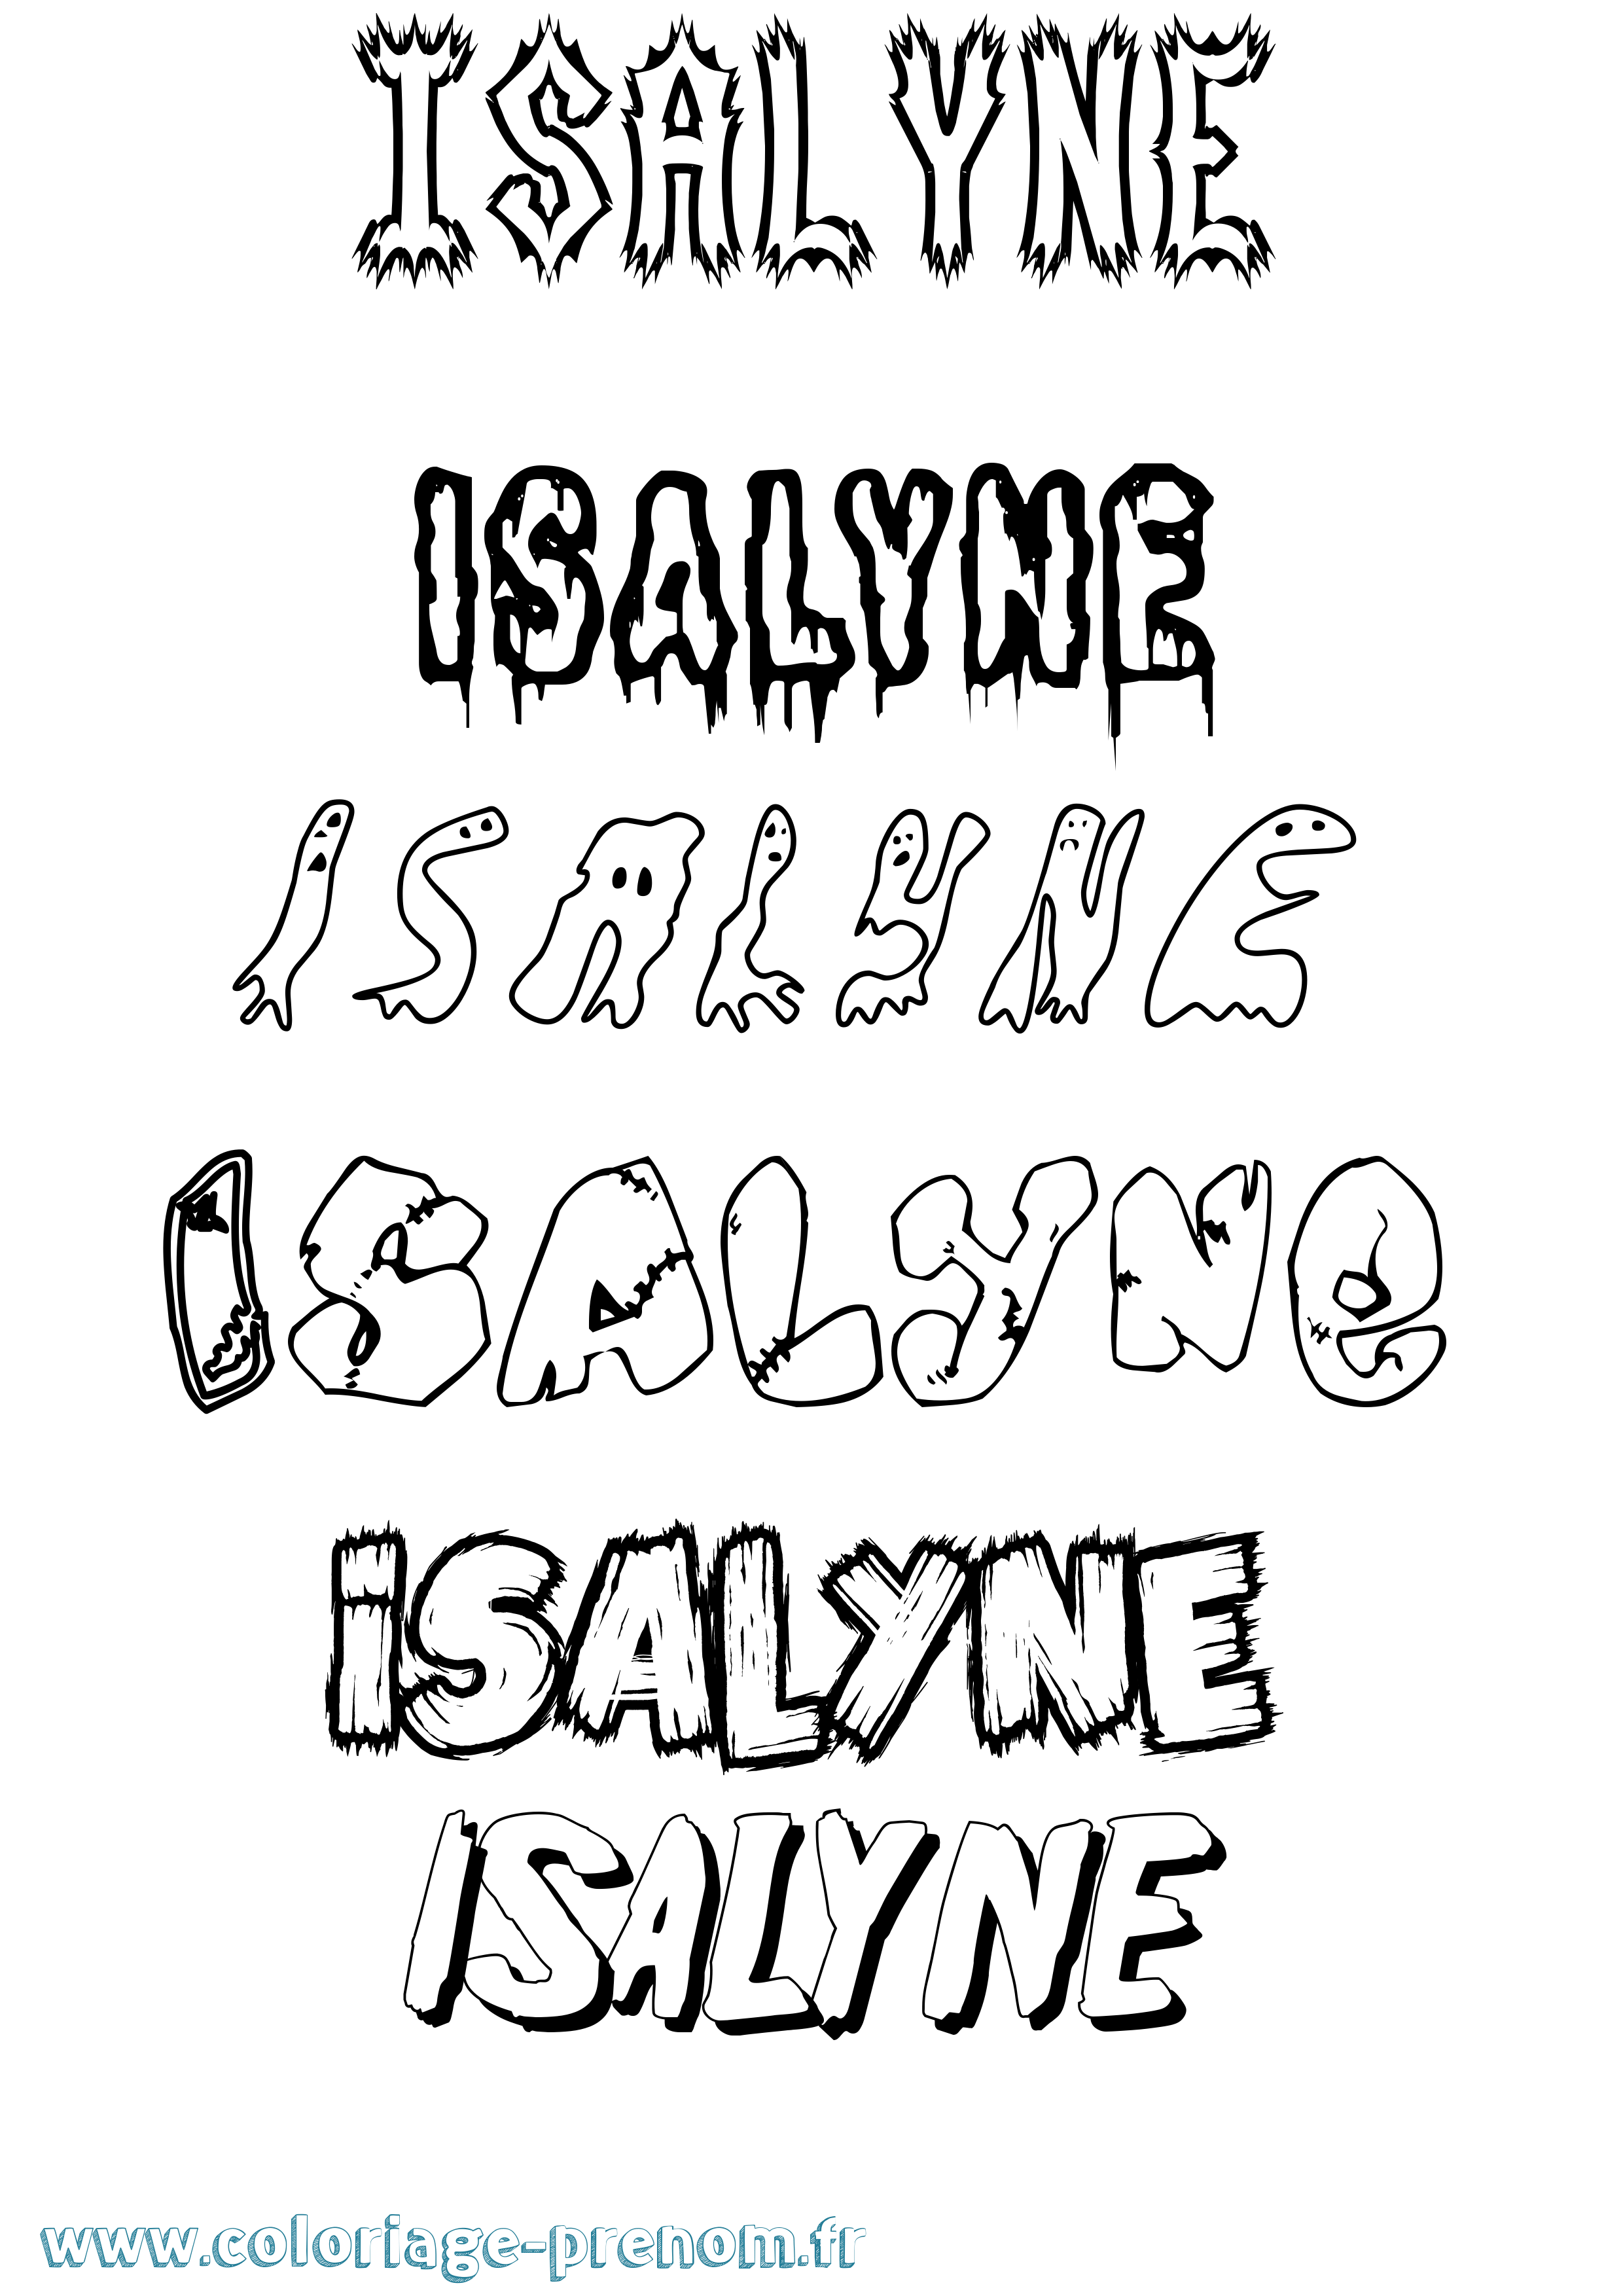 Coloriage prénom Isalyne Frisson